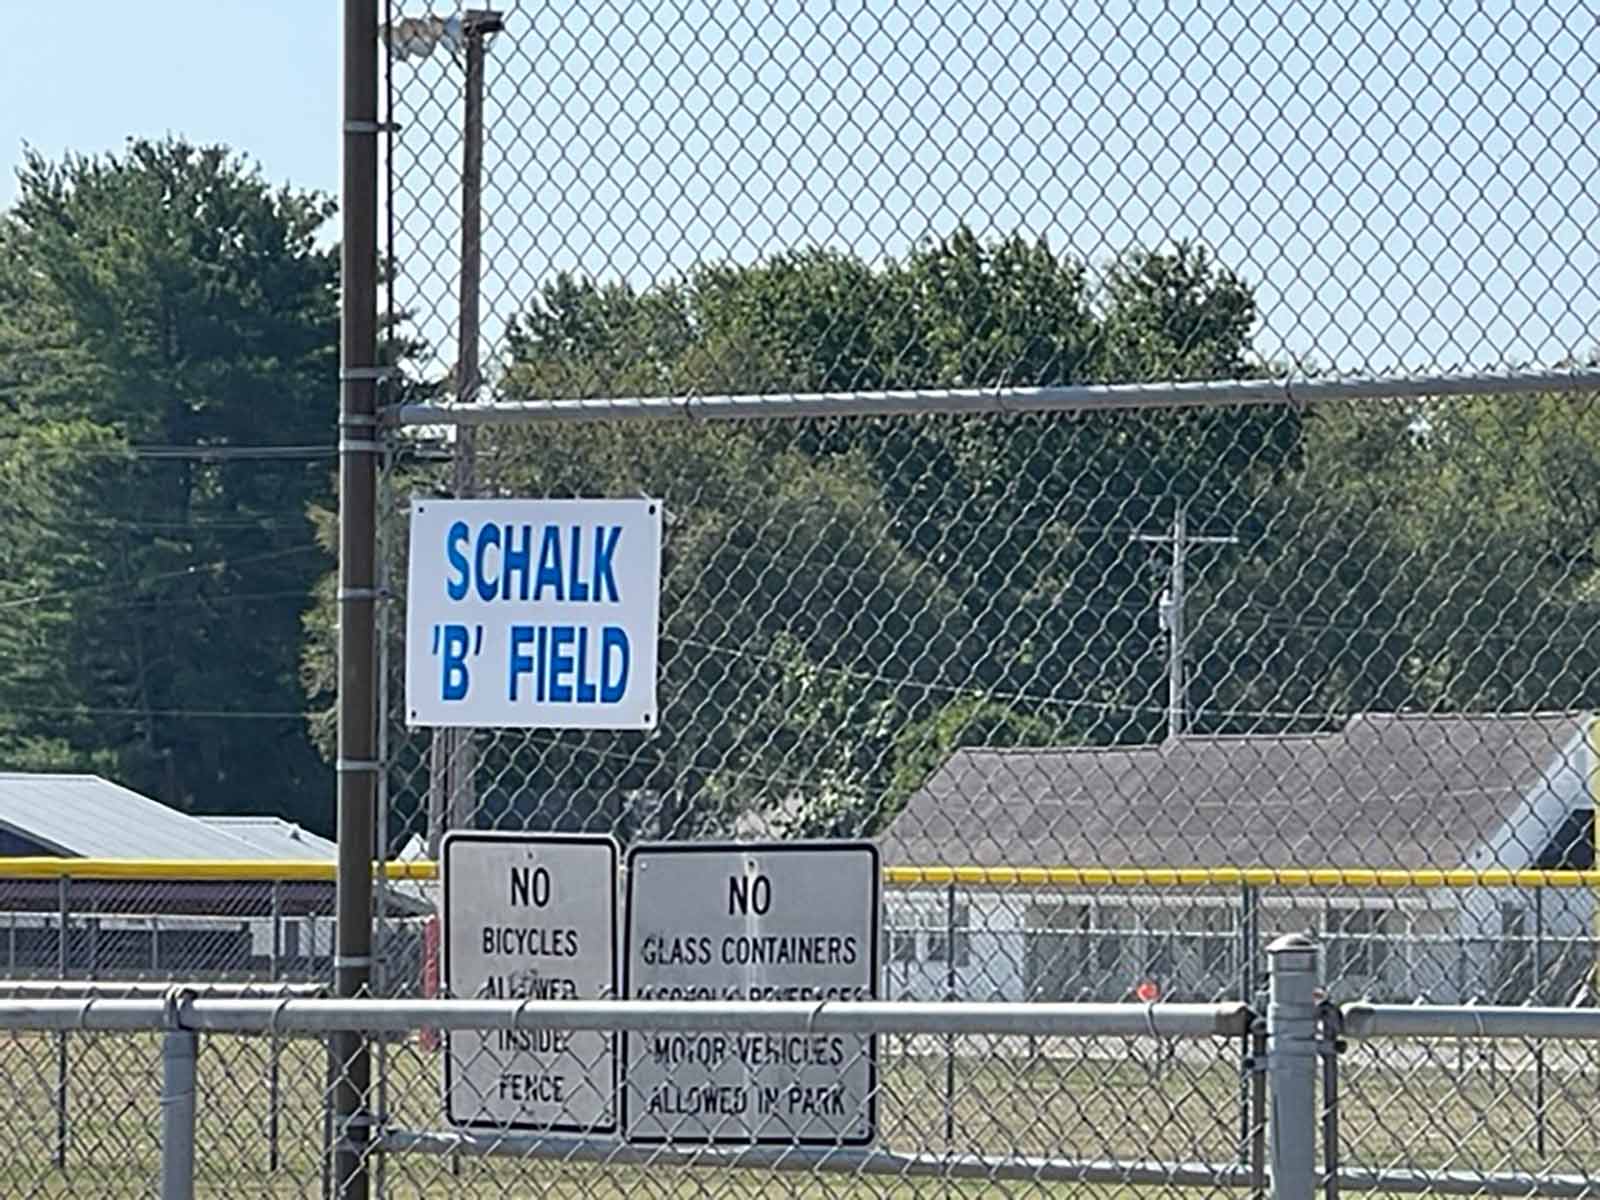 Schalk B Field sign on the fence